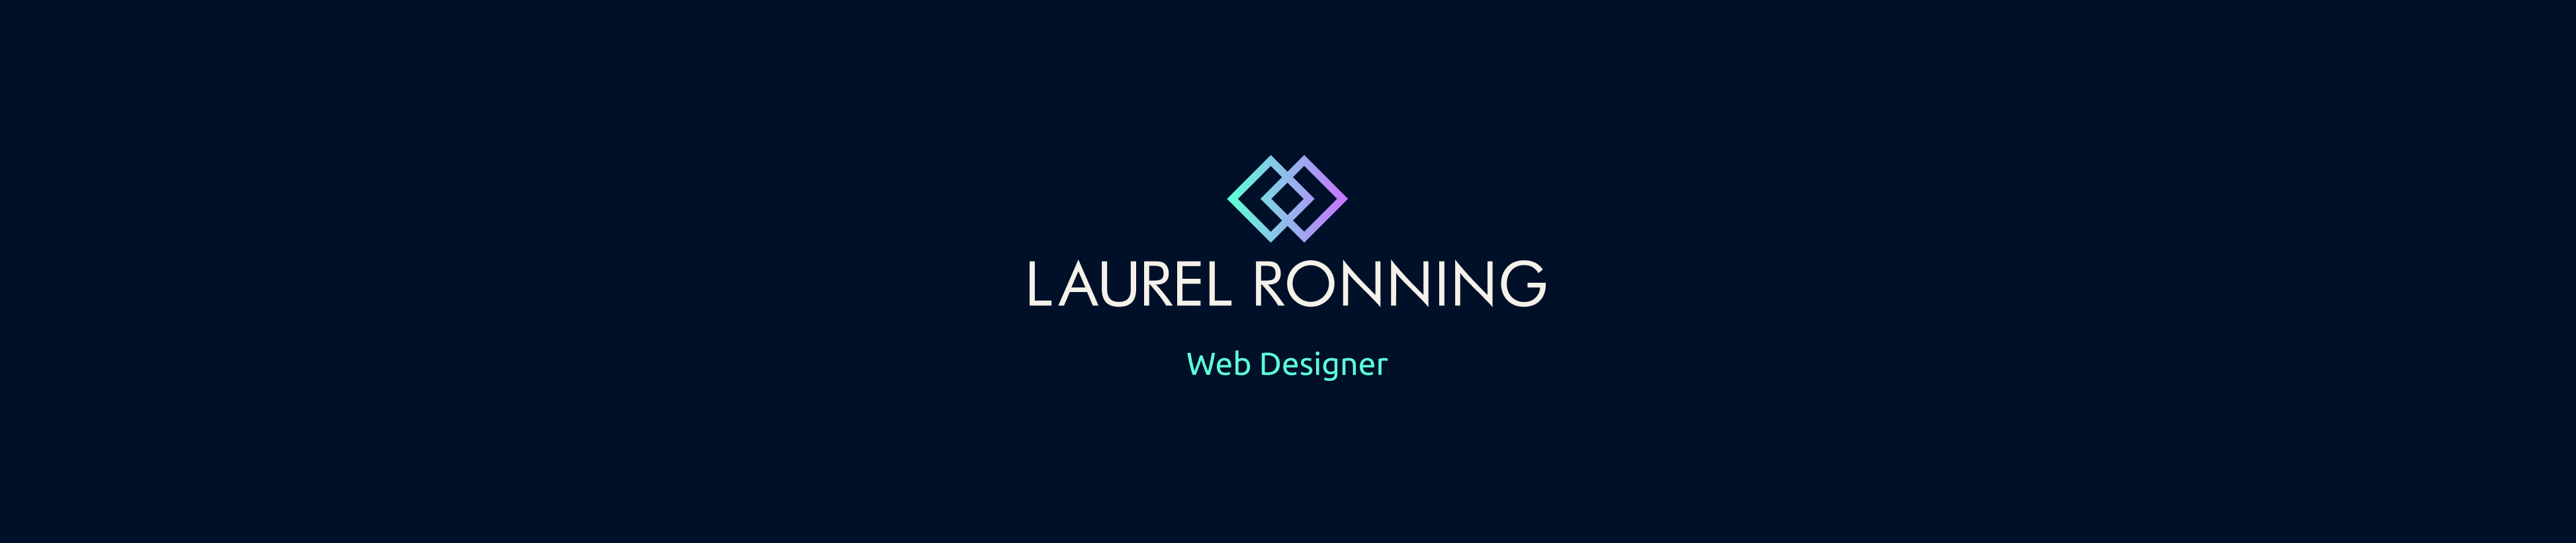 Laurel Ronning's profile banner